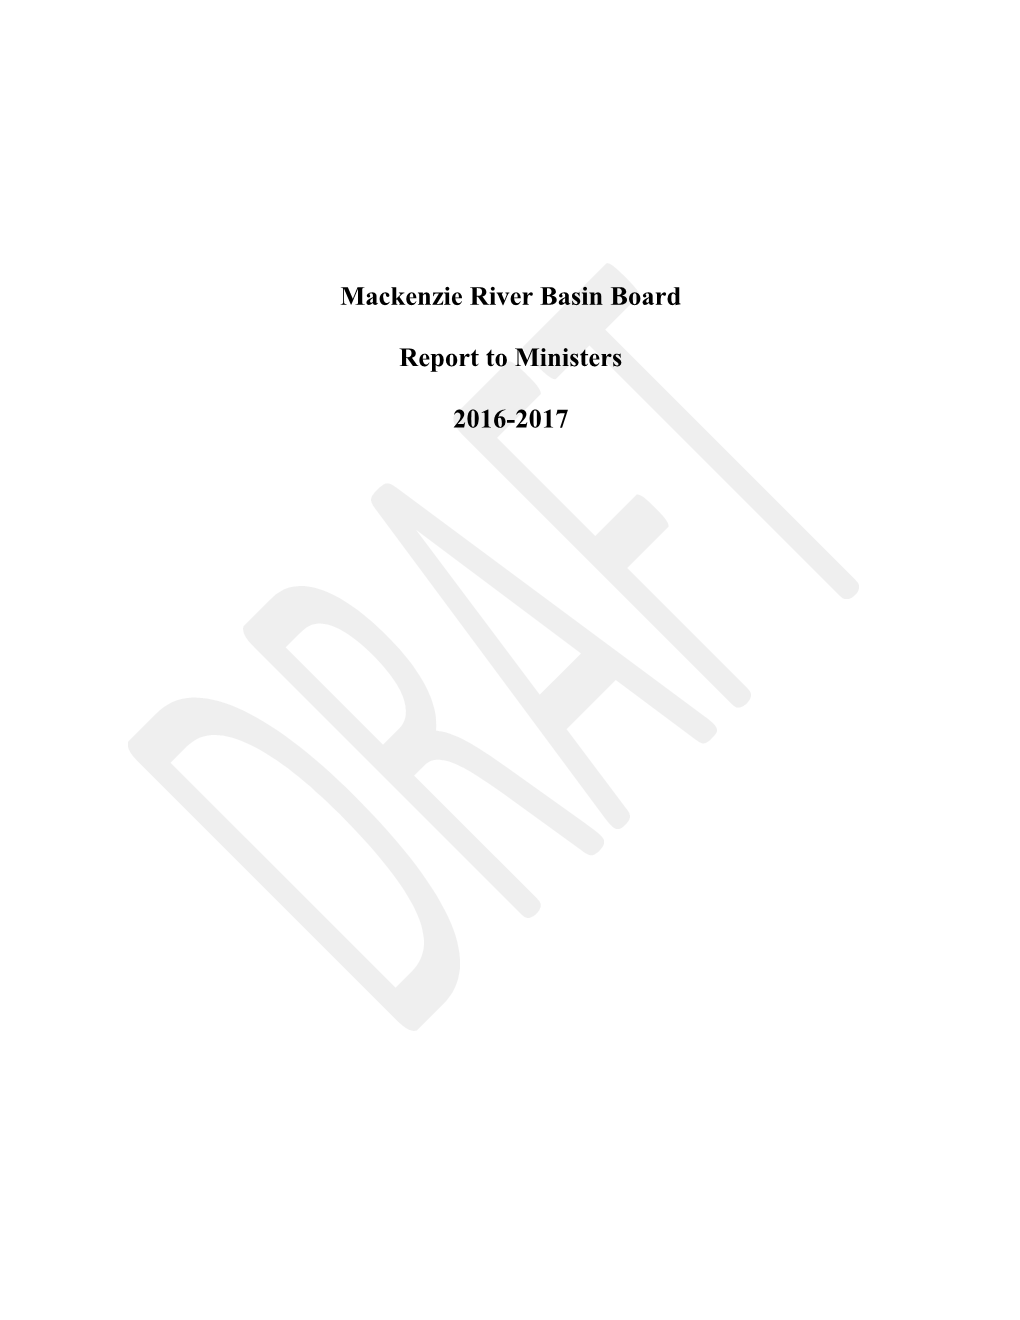 Mackenzie River Basin Board Financial Report